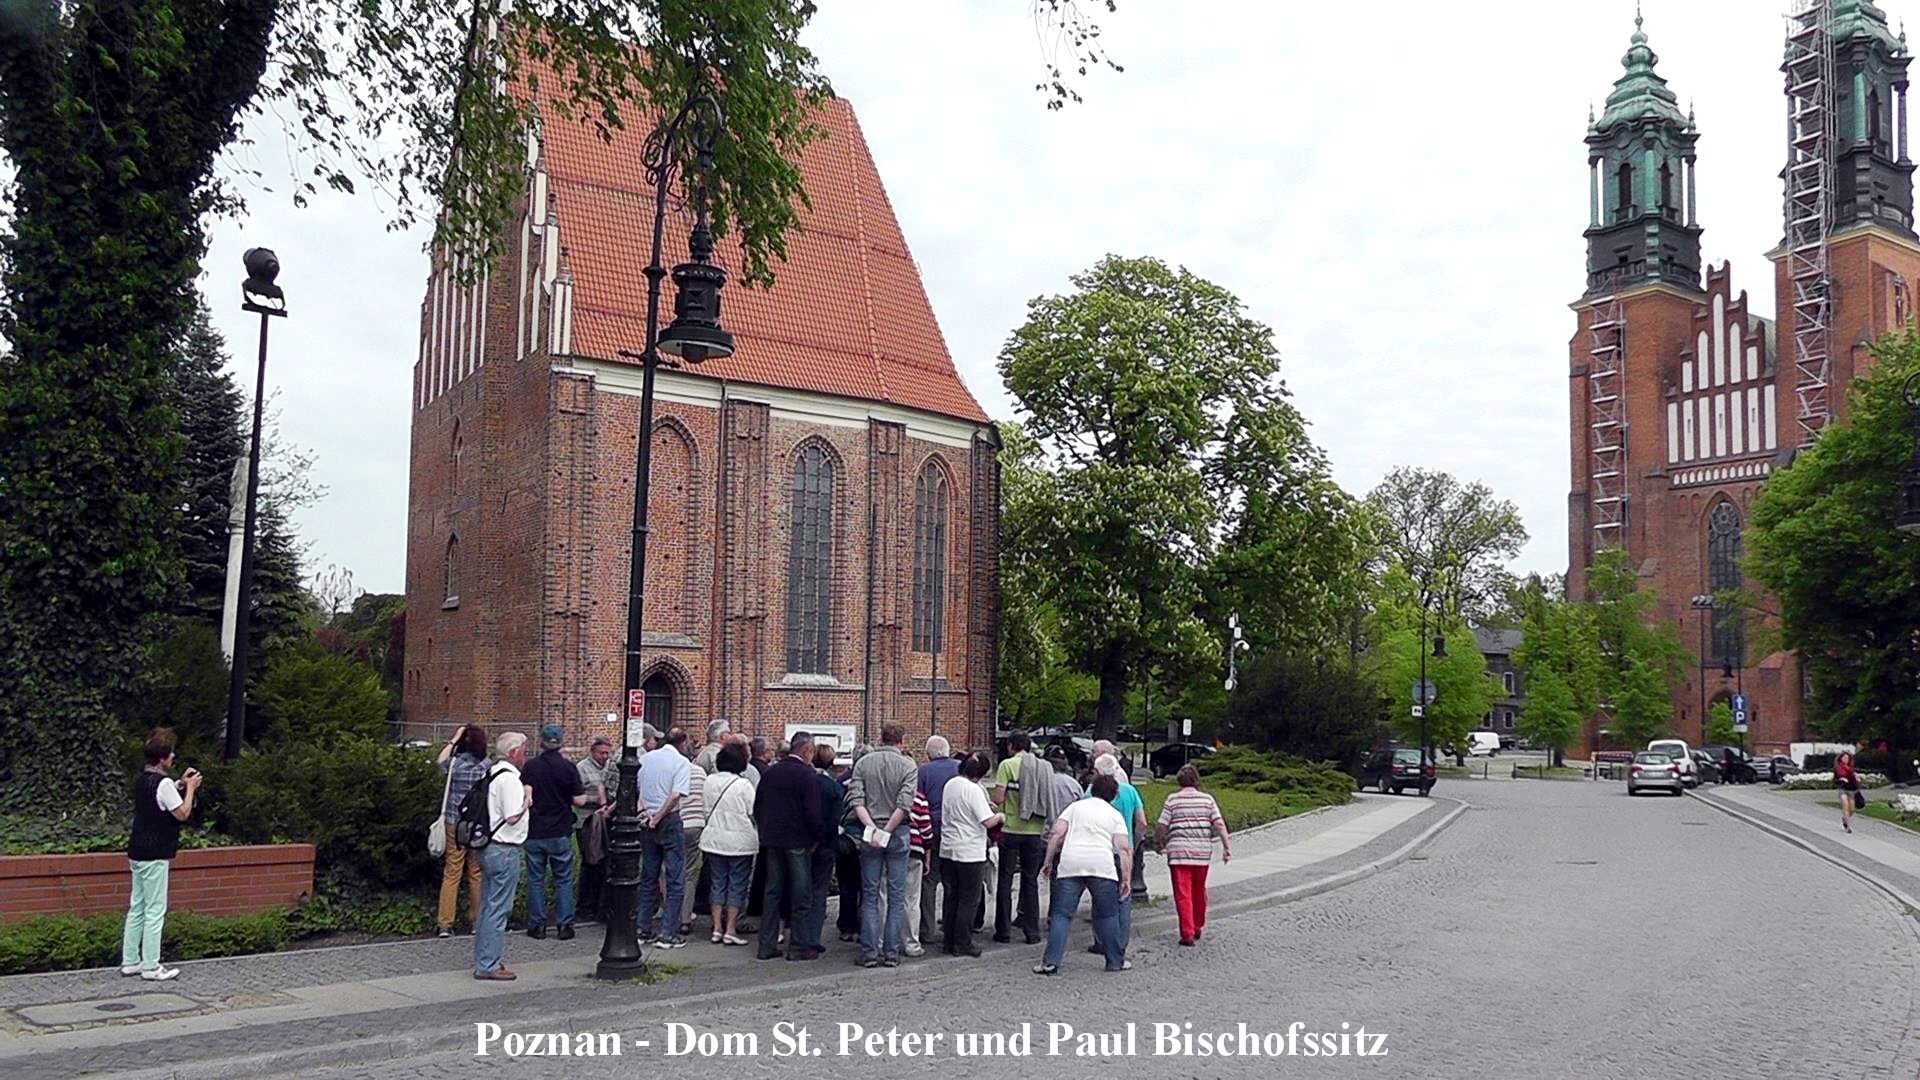 Poznan Dom Peter und Paul